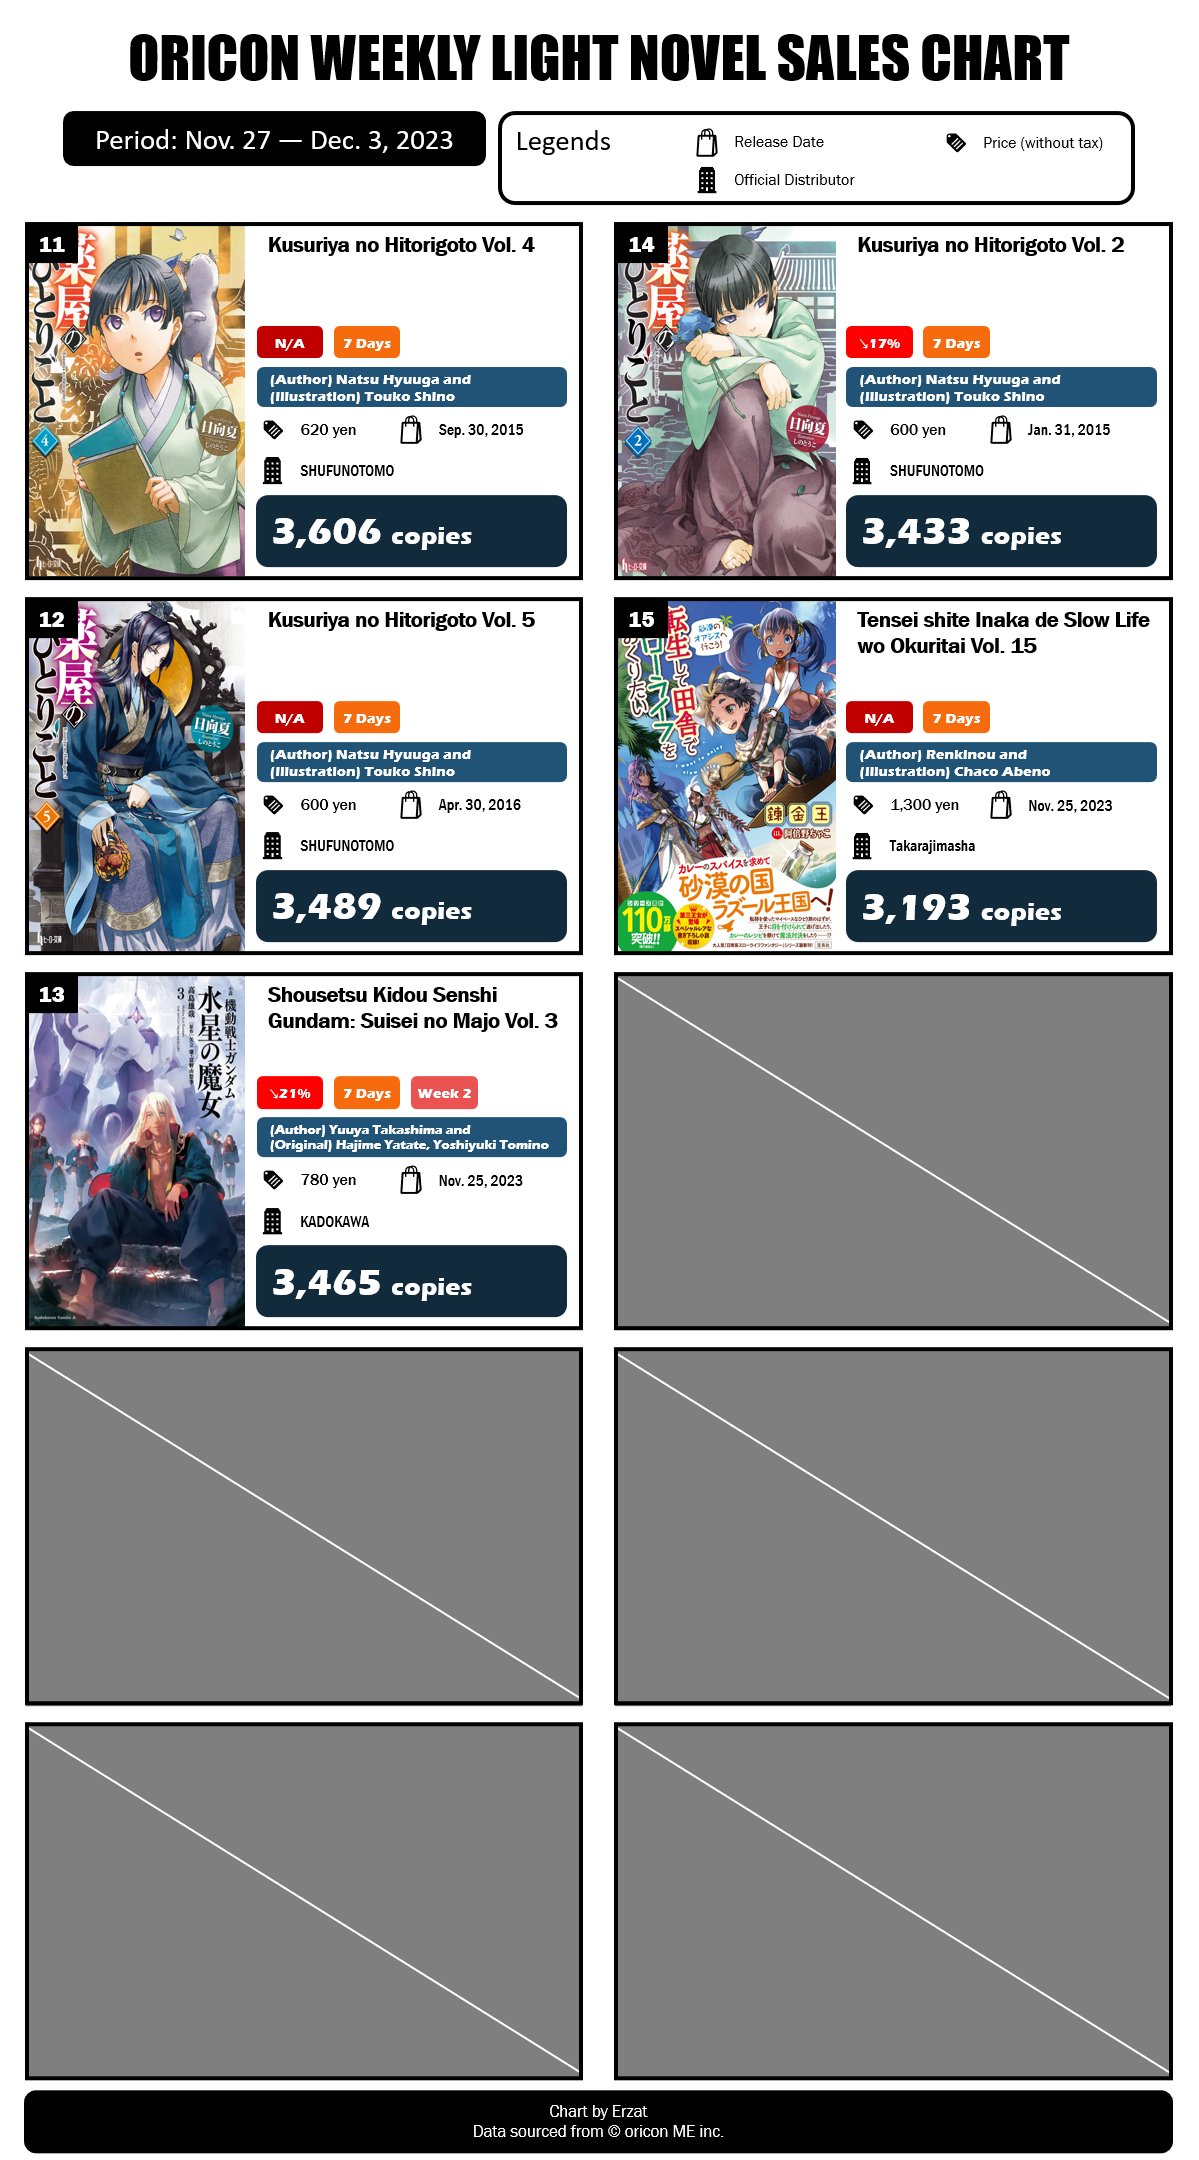 Japan Top Weekly Manga Sales Ranking: December 12 - December 18, 2022 -  Erzat